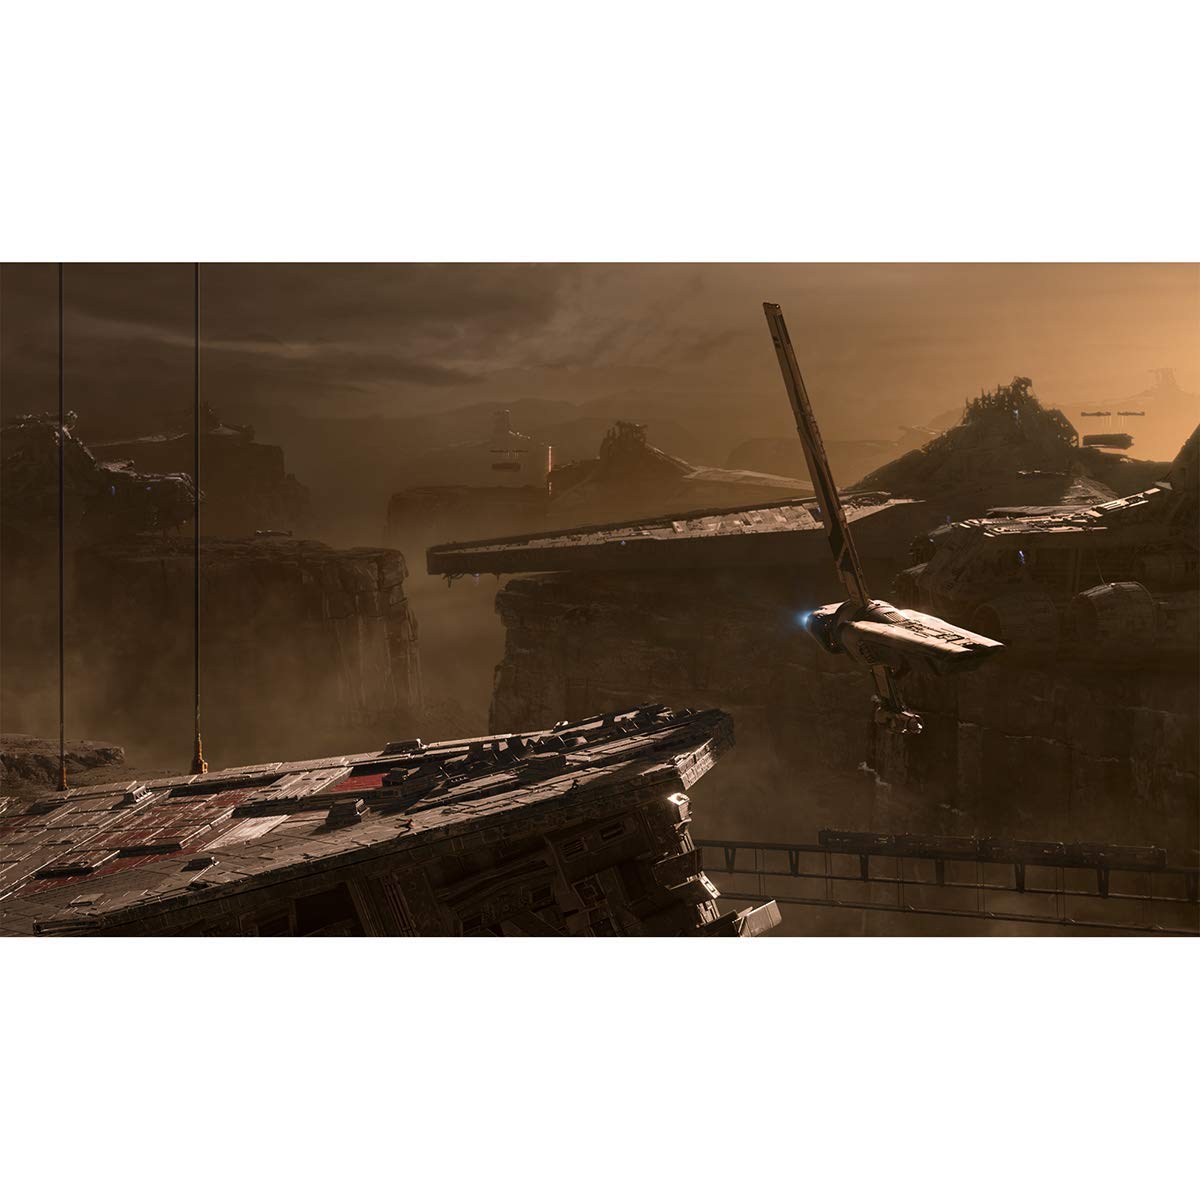 Xbox One X 1TB Console - Star Wars Jedi: Fallen Order Bundle (Renewed) [video game]